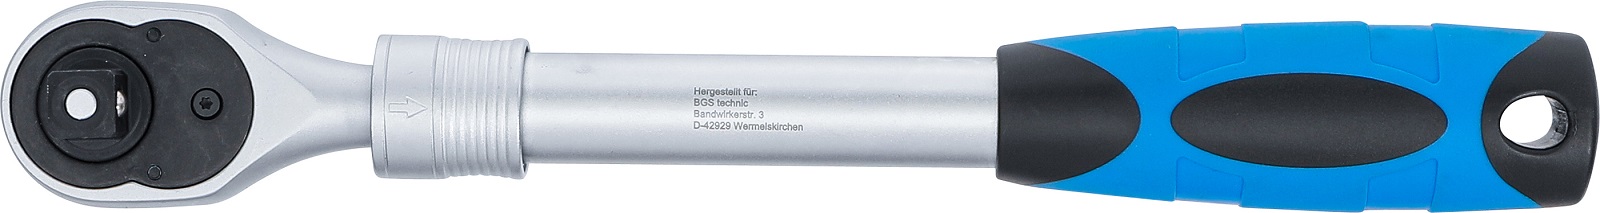 BGS 25108 XL Teleskopknarre Ratsche Ausziehbar 450 bis 610 mm Knarre 1/2" 